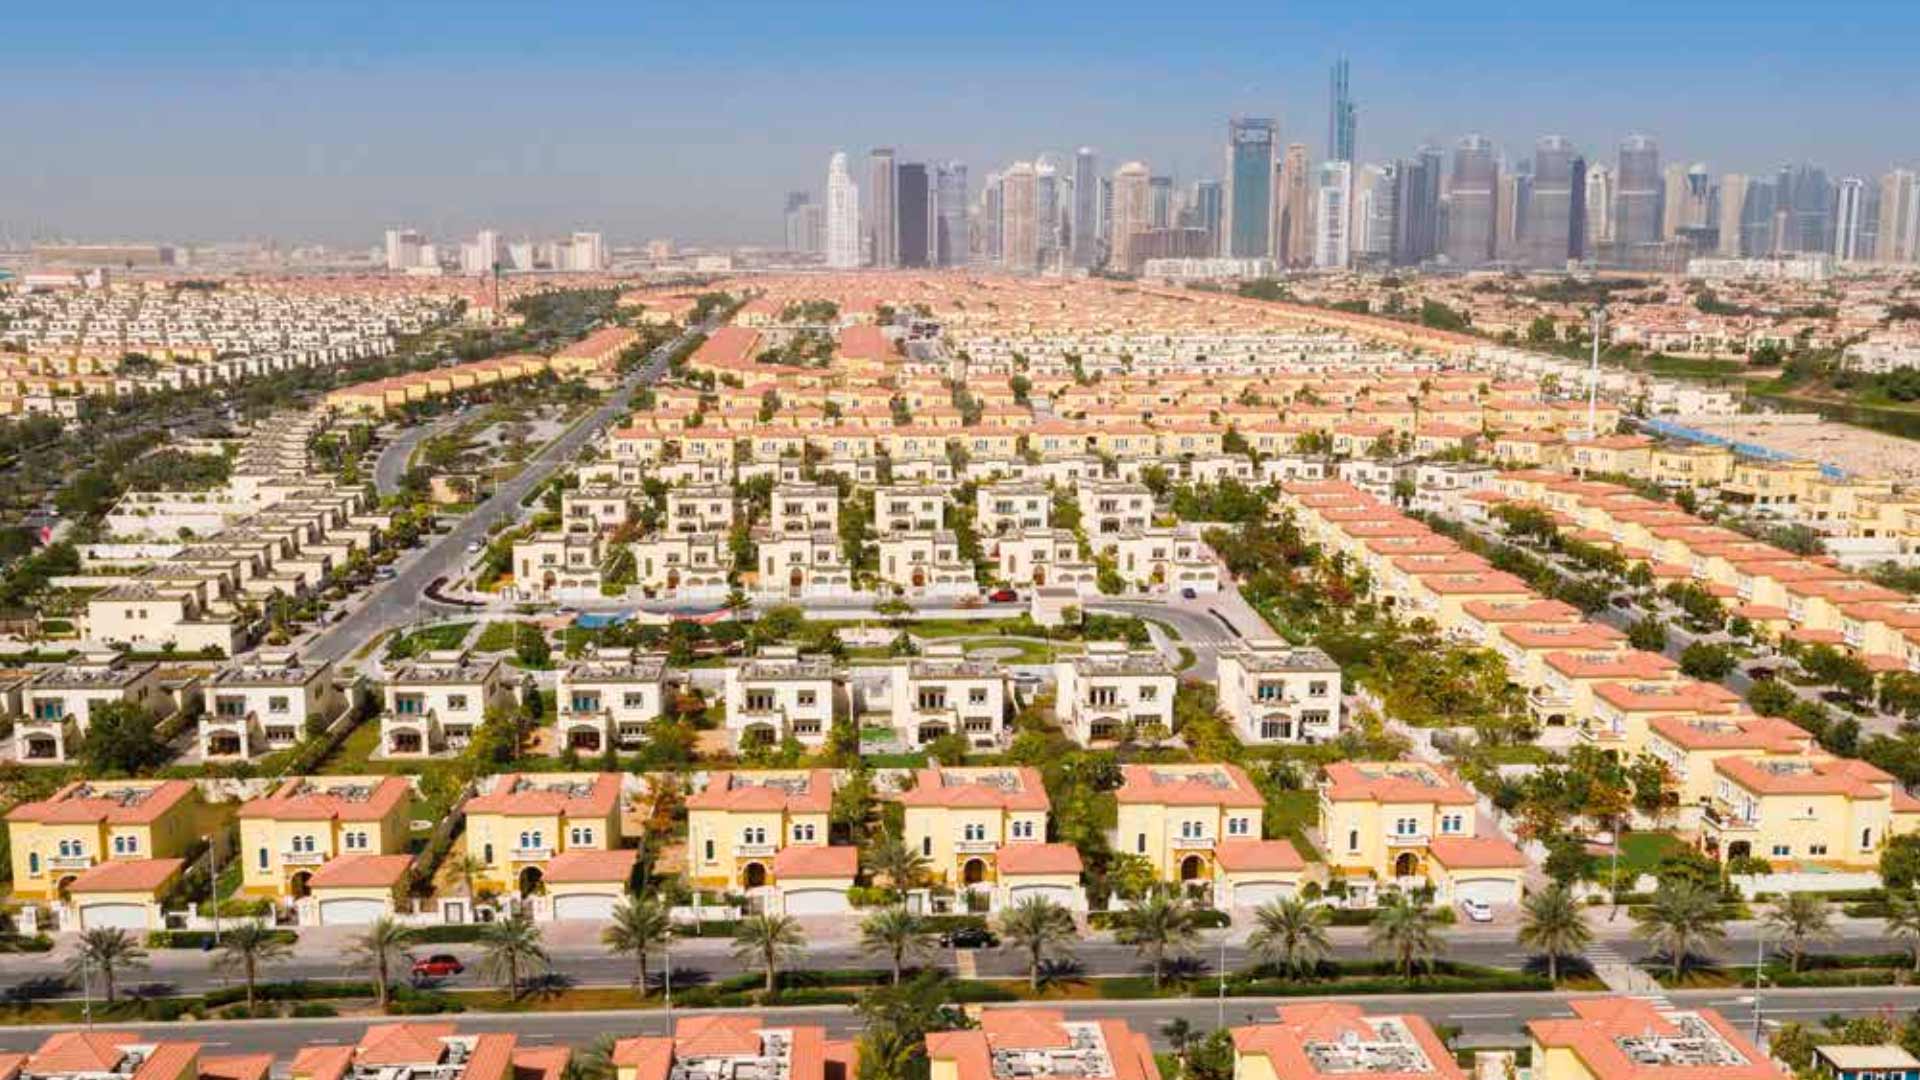 JUMEIRAH PARK HOMES в Jumeirah Park, Dubai, ОАЭ